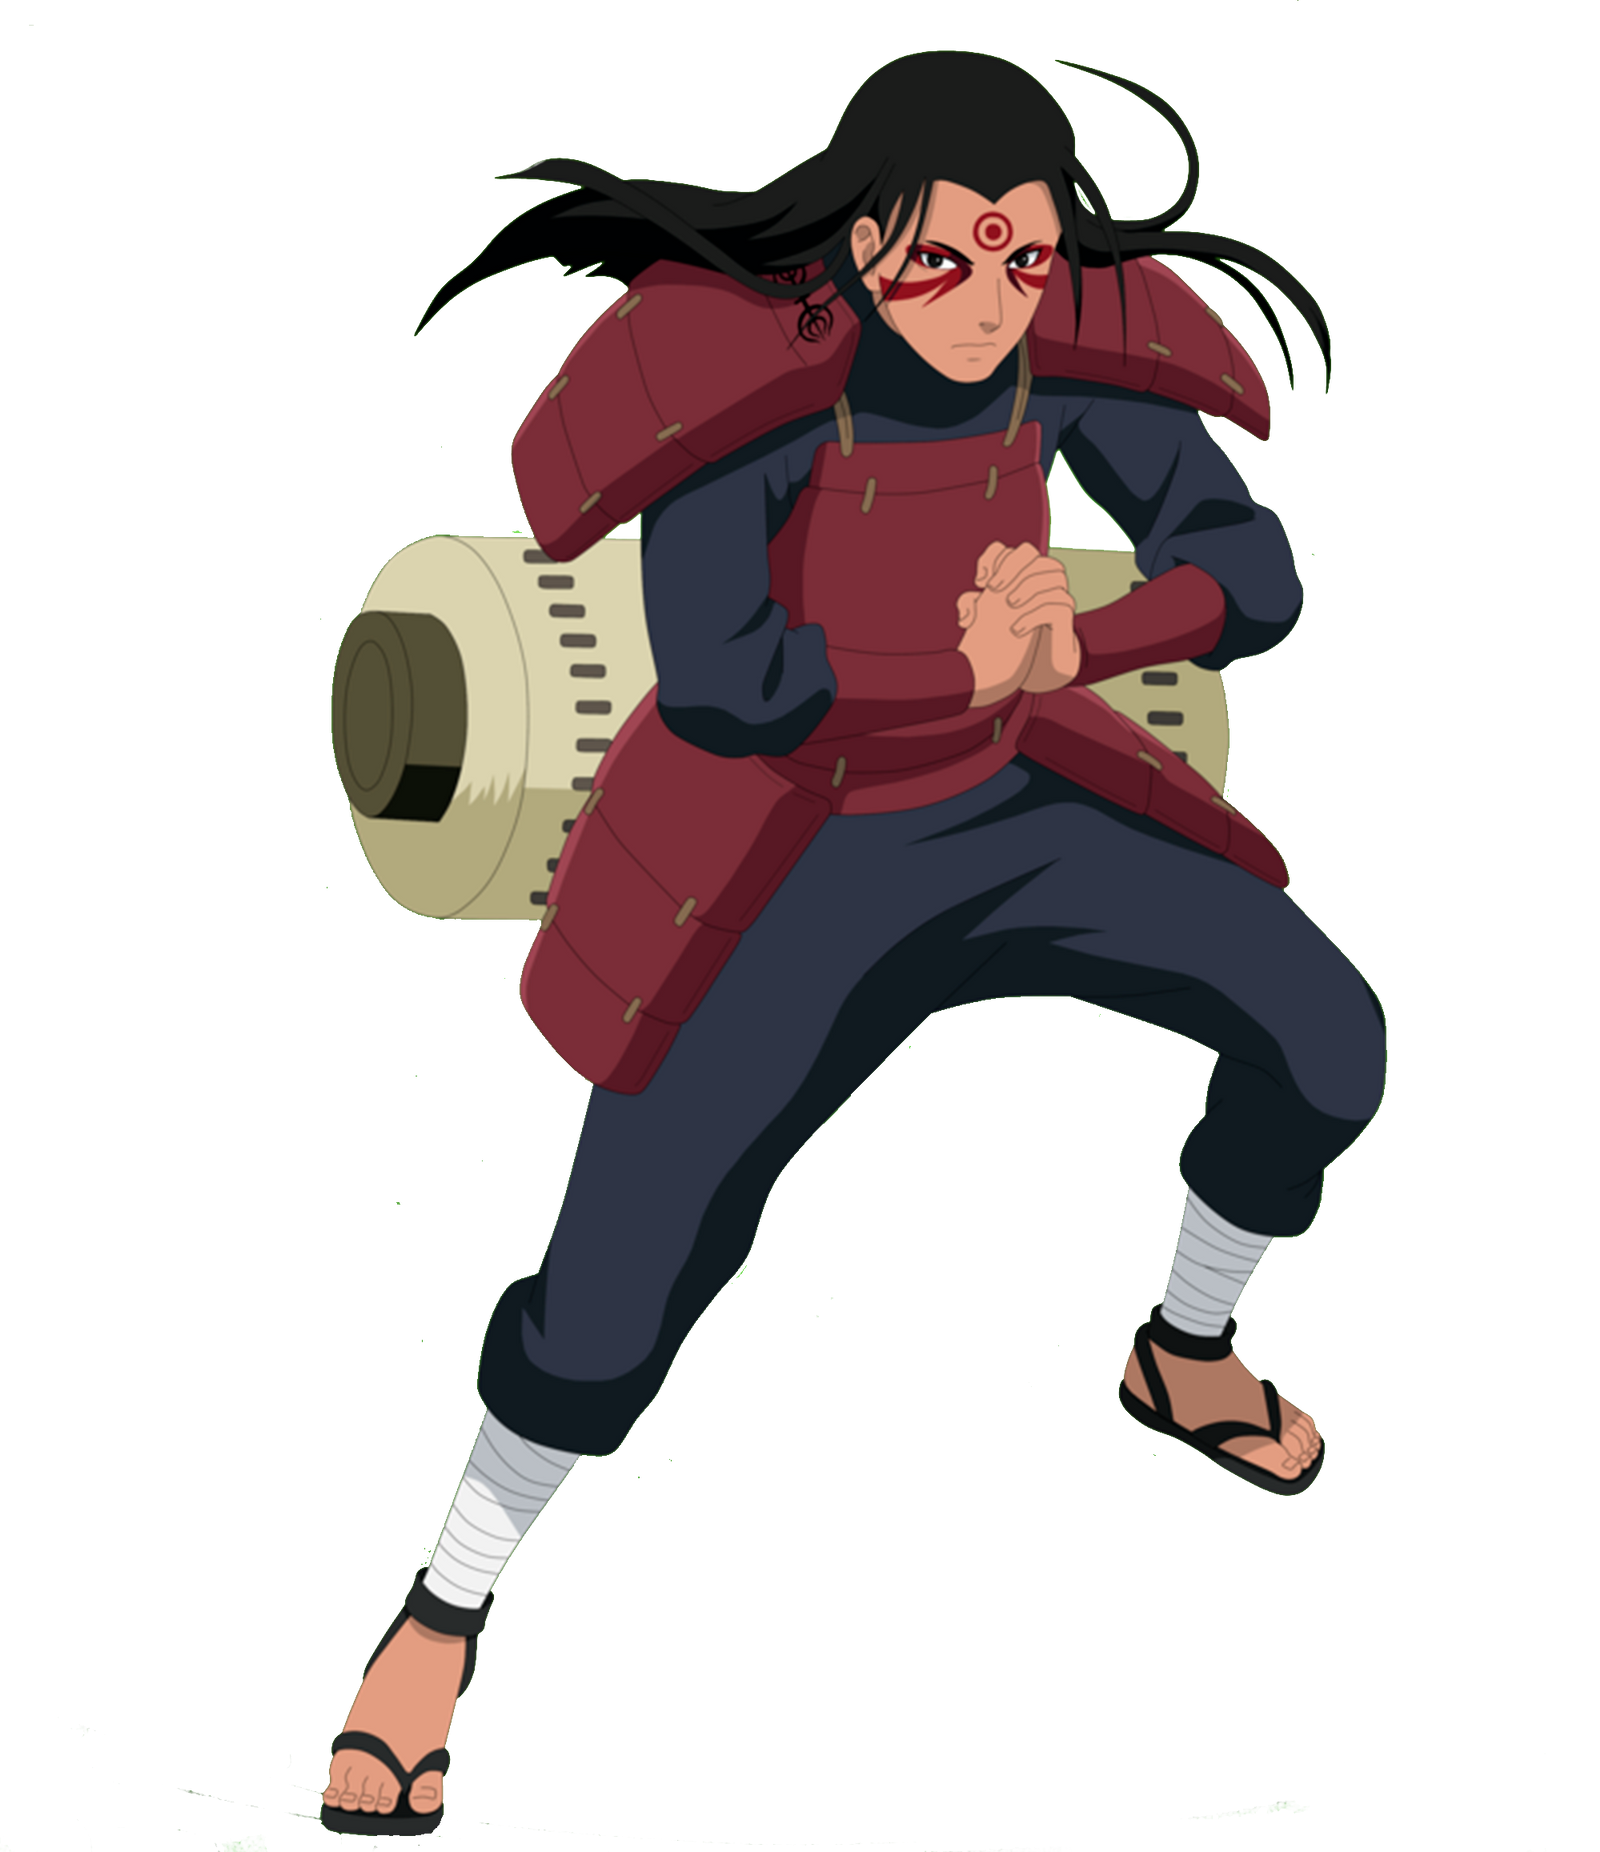 Primer hokage Hashirama, Naruto Shippuden by Davidflp3 on DeviantArt